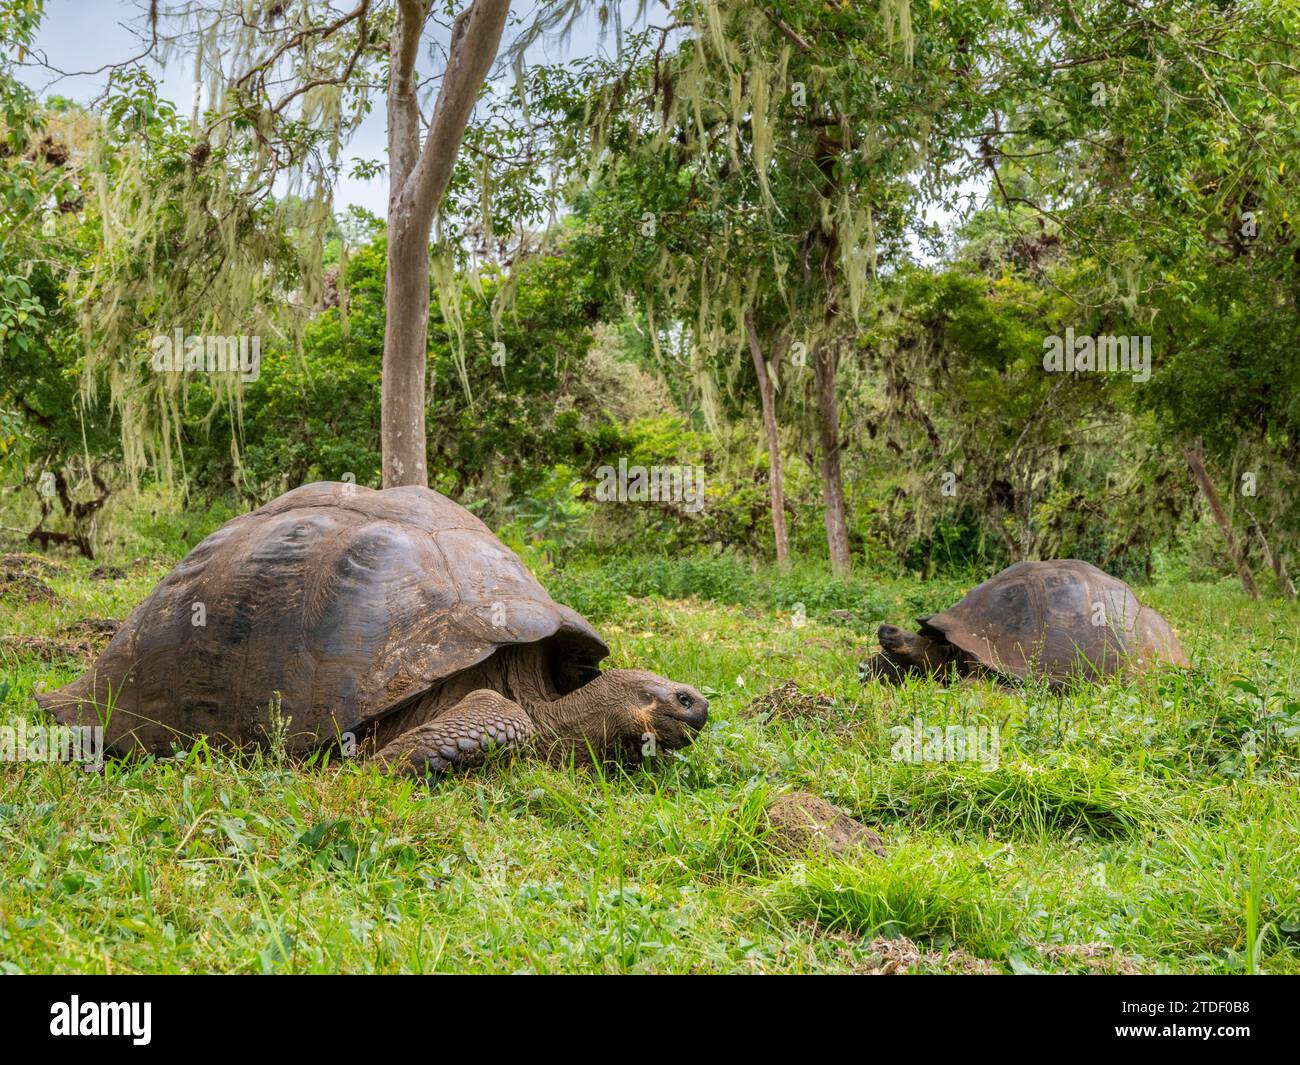 Wild Galapagos giant tortoises (Chelonoidis spp), found in Rancho Manzanillo, Santa Cruz Island, Galapagos Islands, UNESCO World Heritage Site Stock Photo